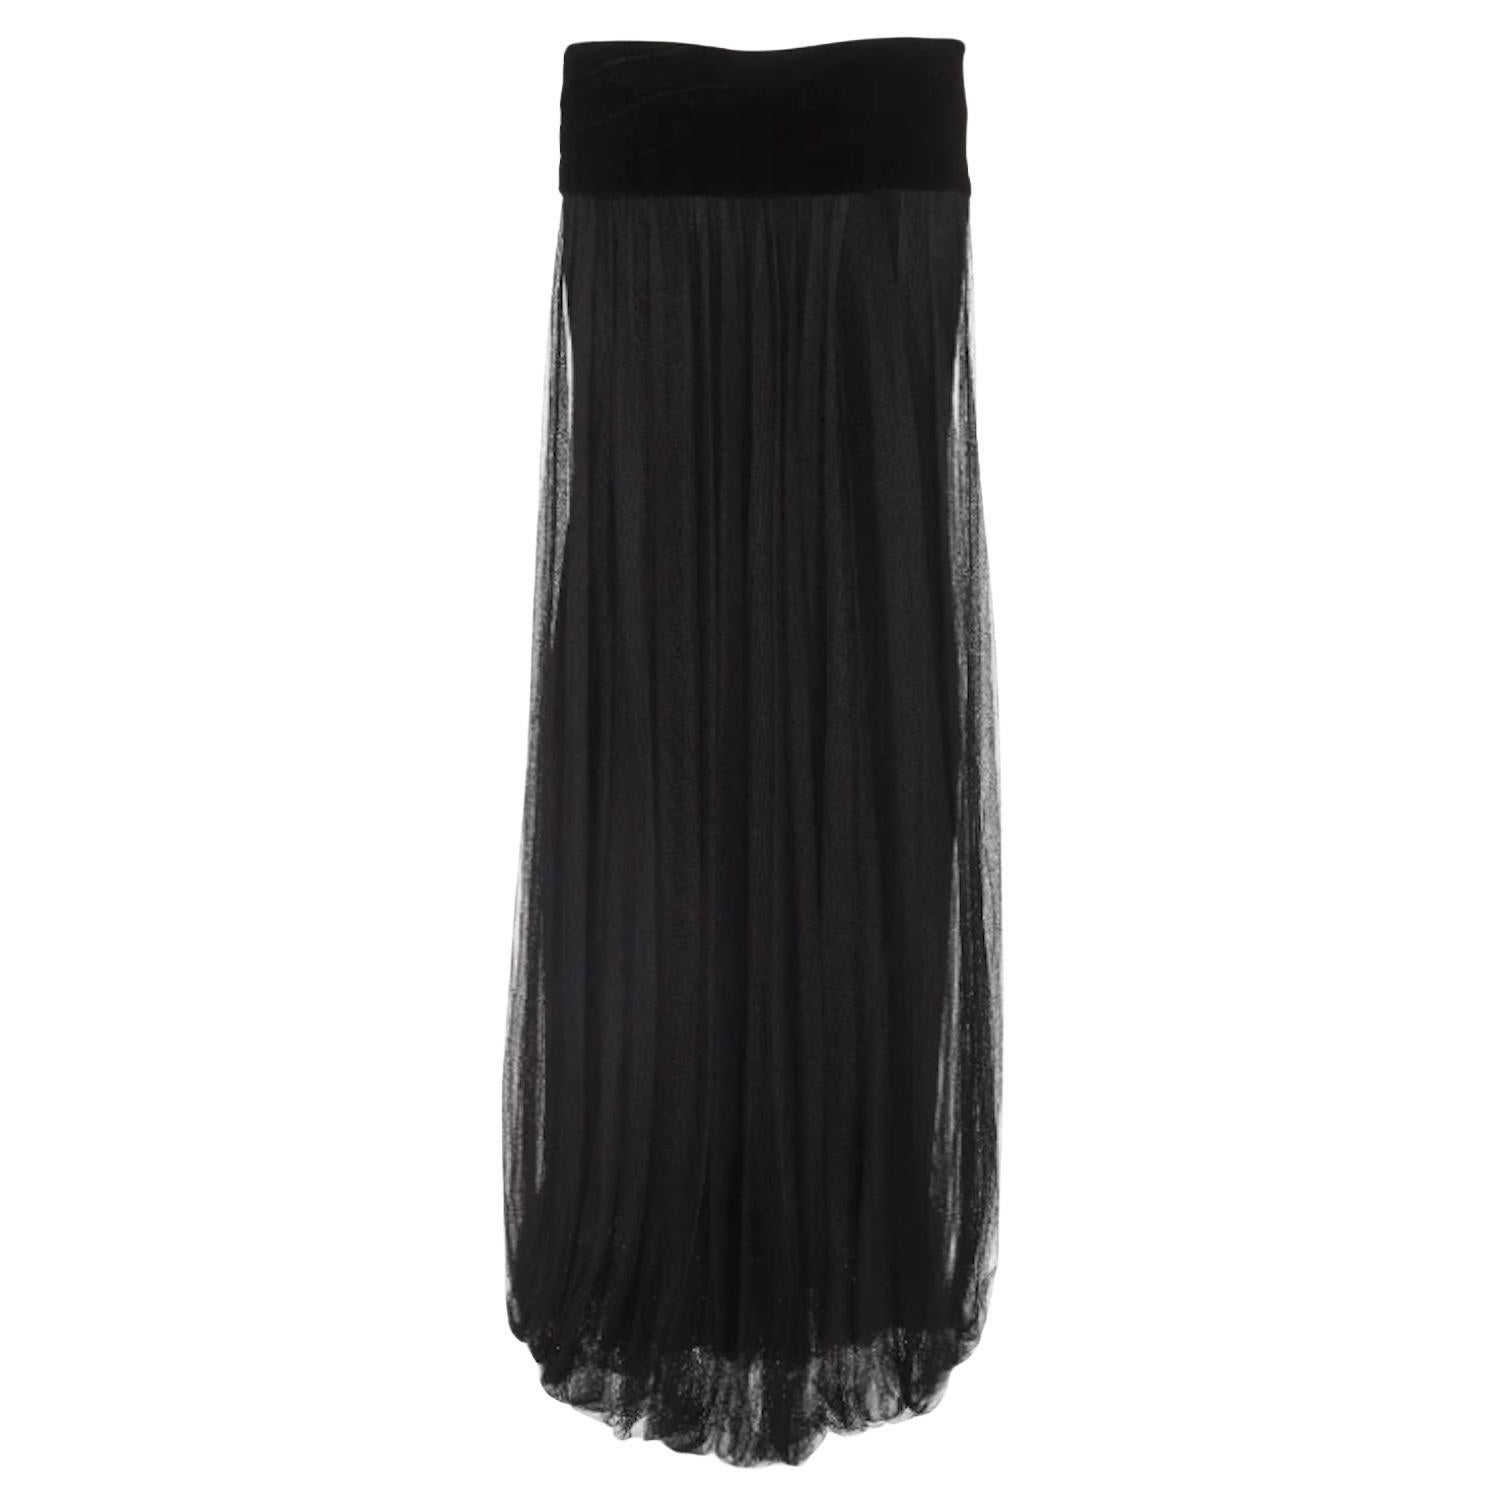 Jean Paul Gaultier Jupe/robe en tulle noir avec détails en velours